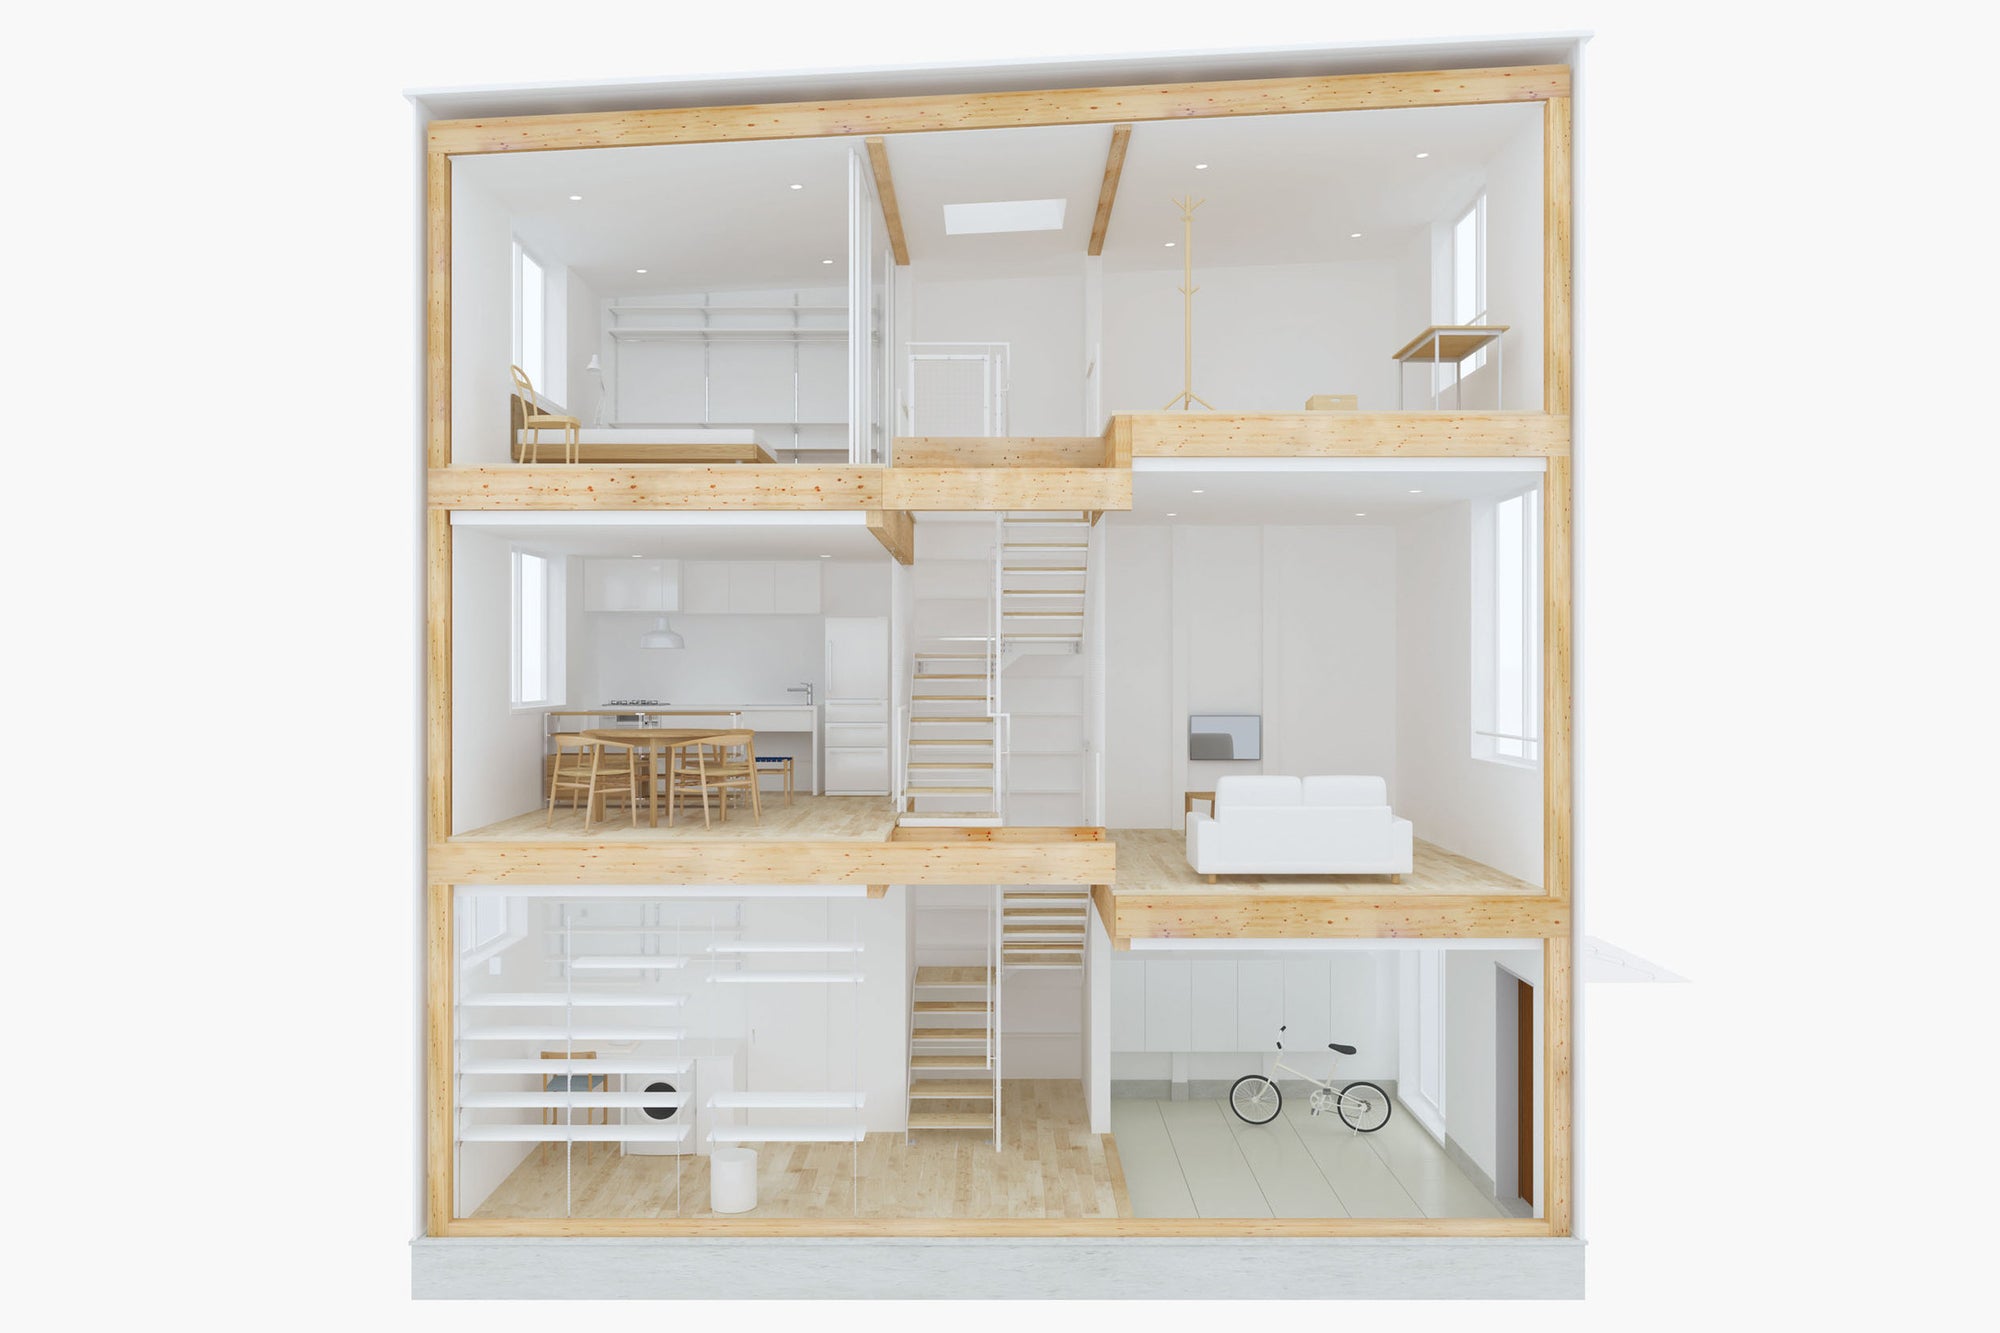 MUJI's New City-Living Prefabricated Vertical House